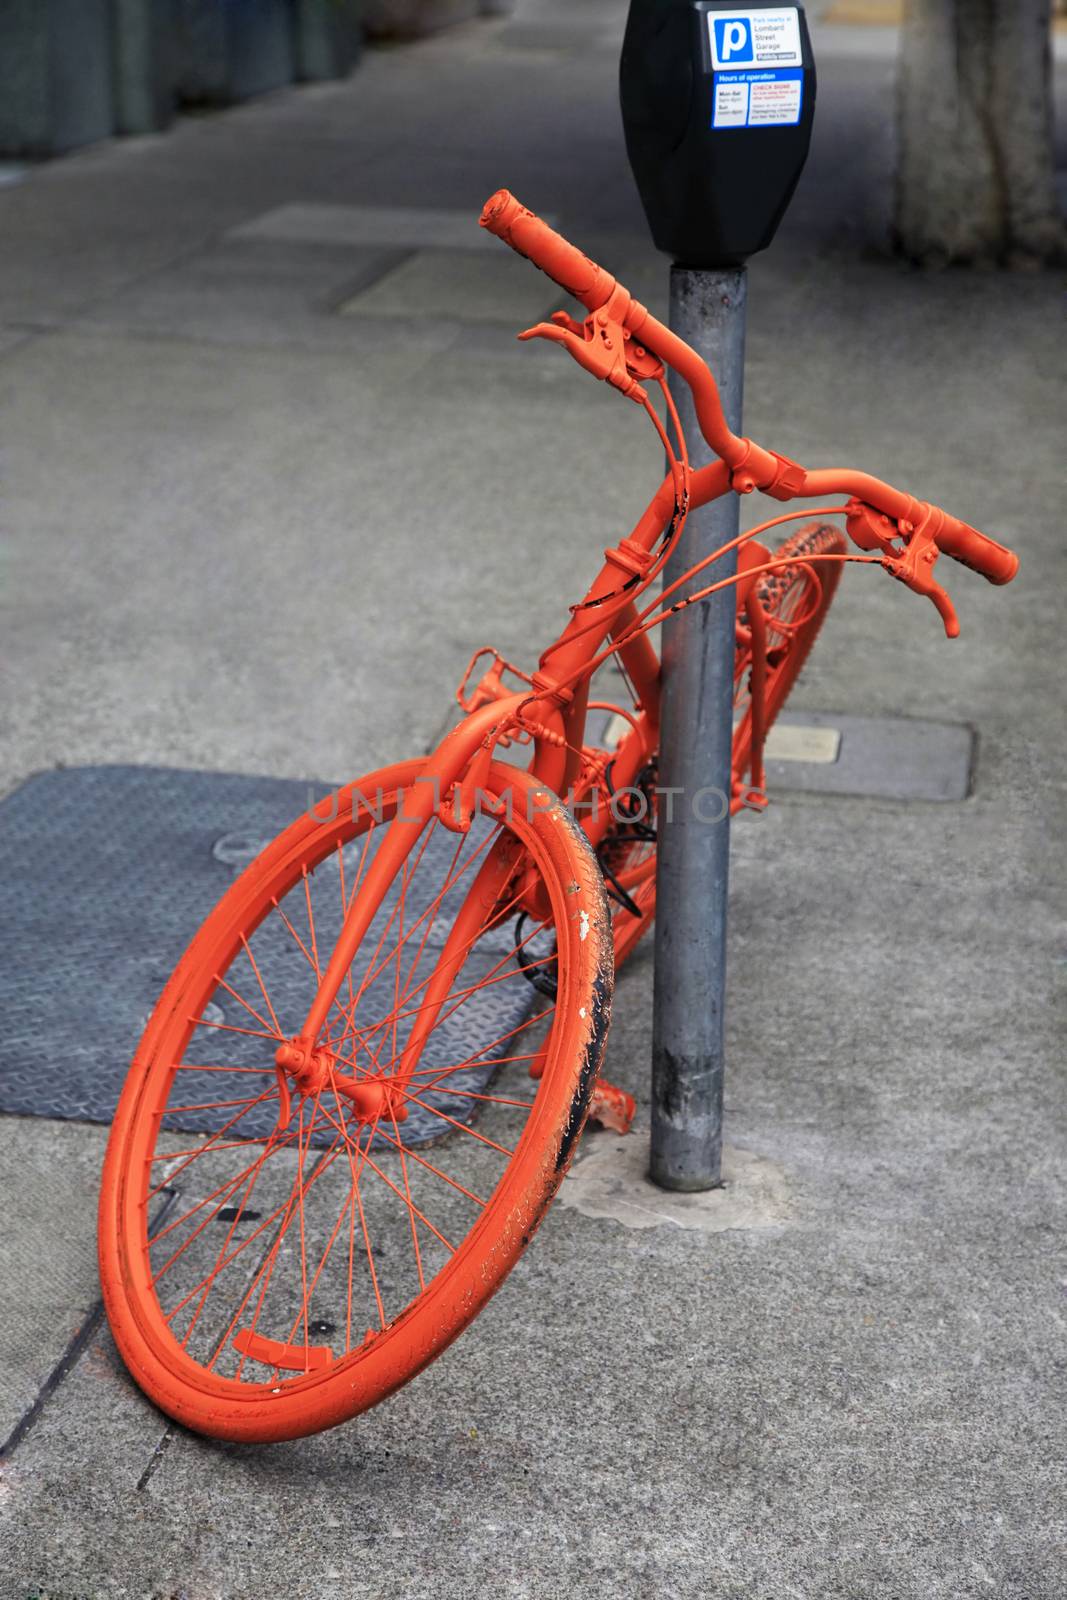 Parked orange bike by friday